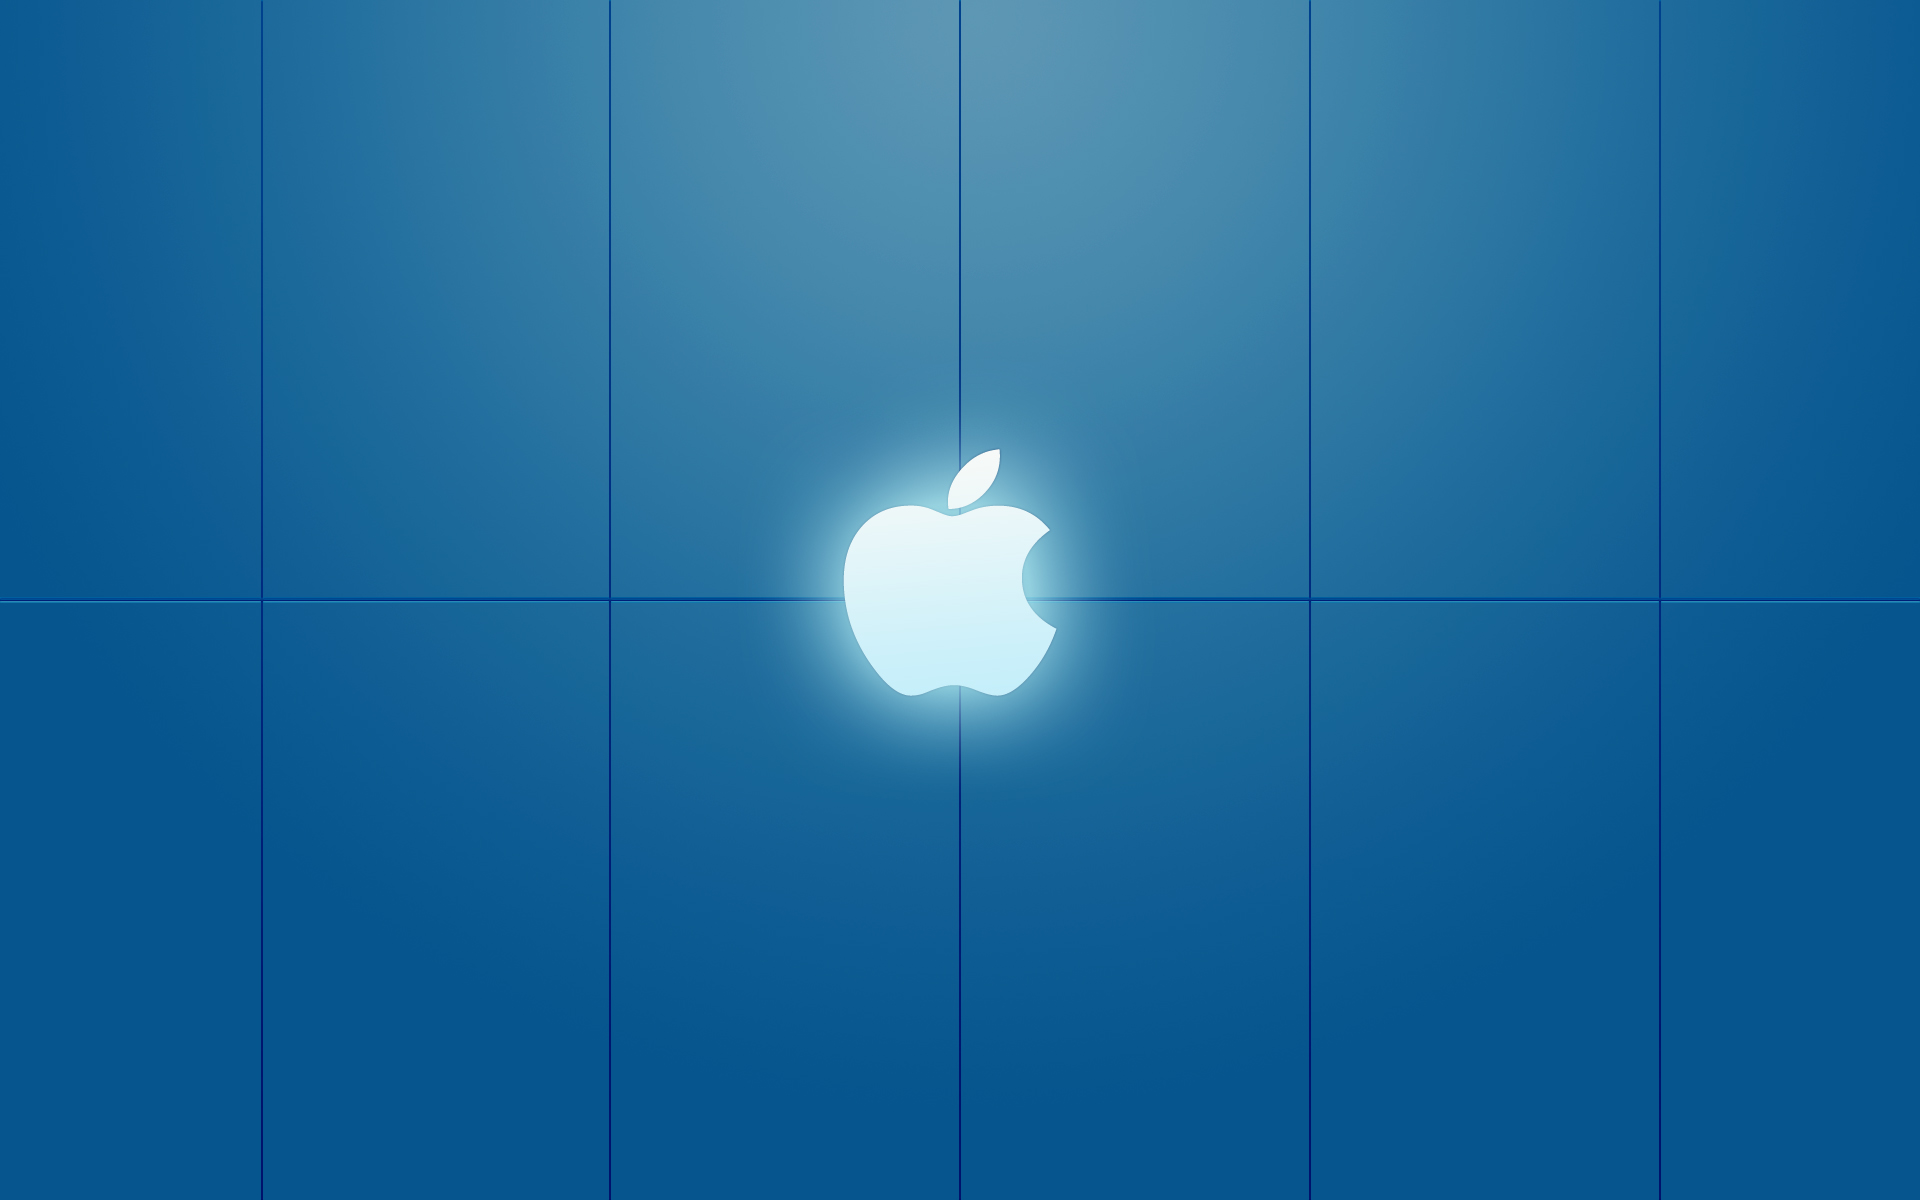  Inspiring Apple Mac amp iPad Wallpapers For Download